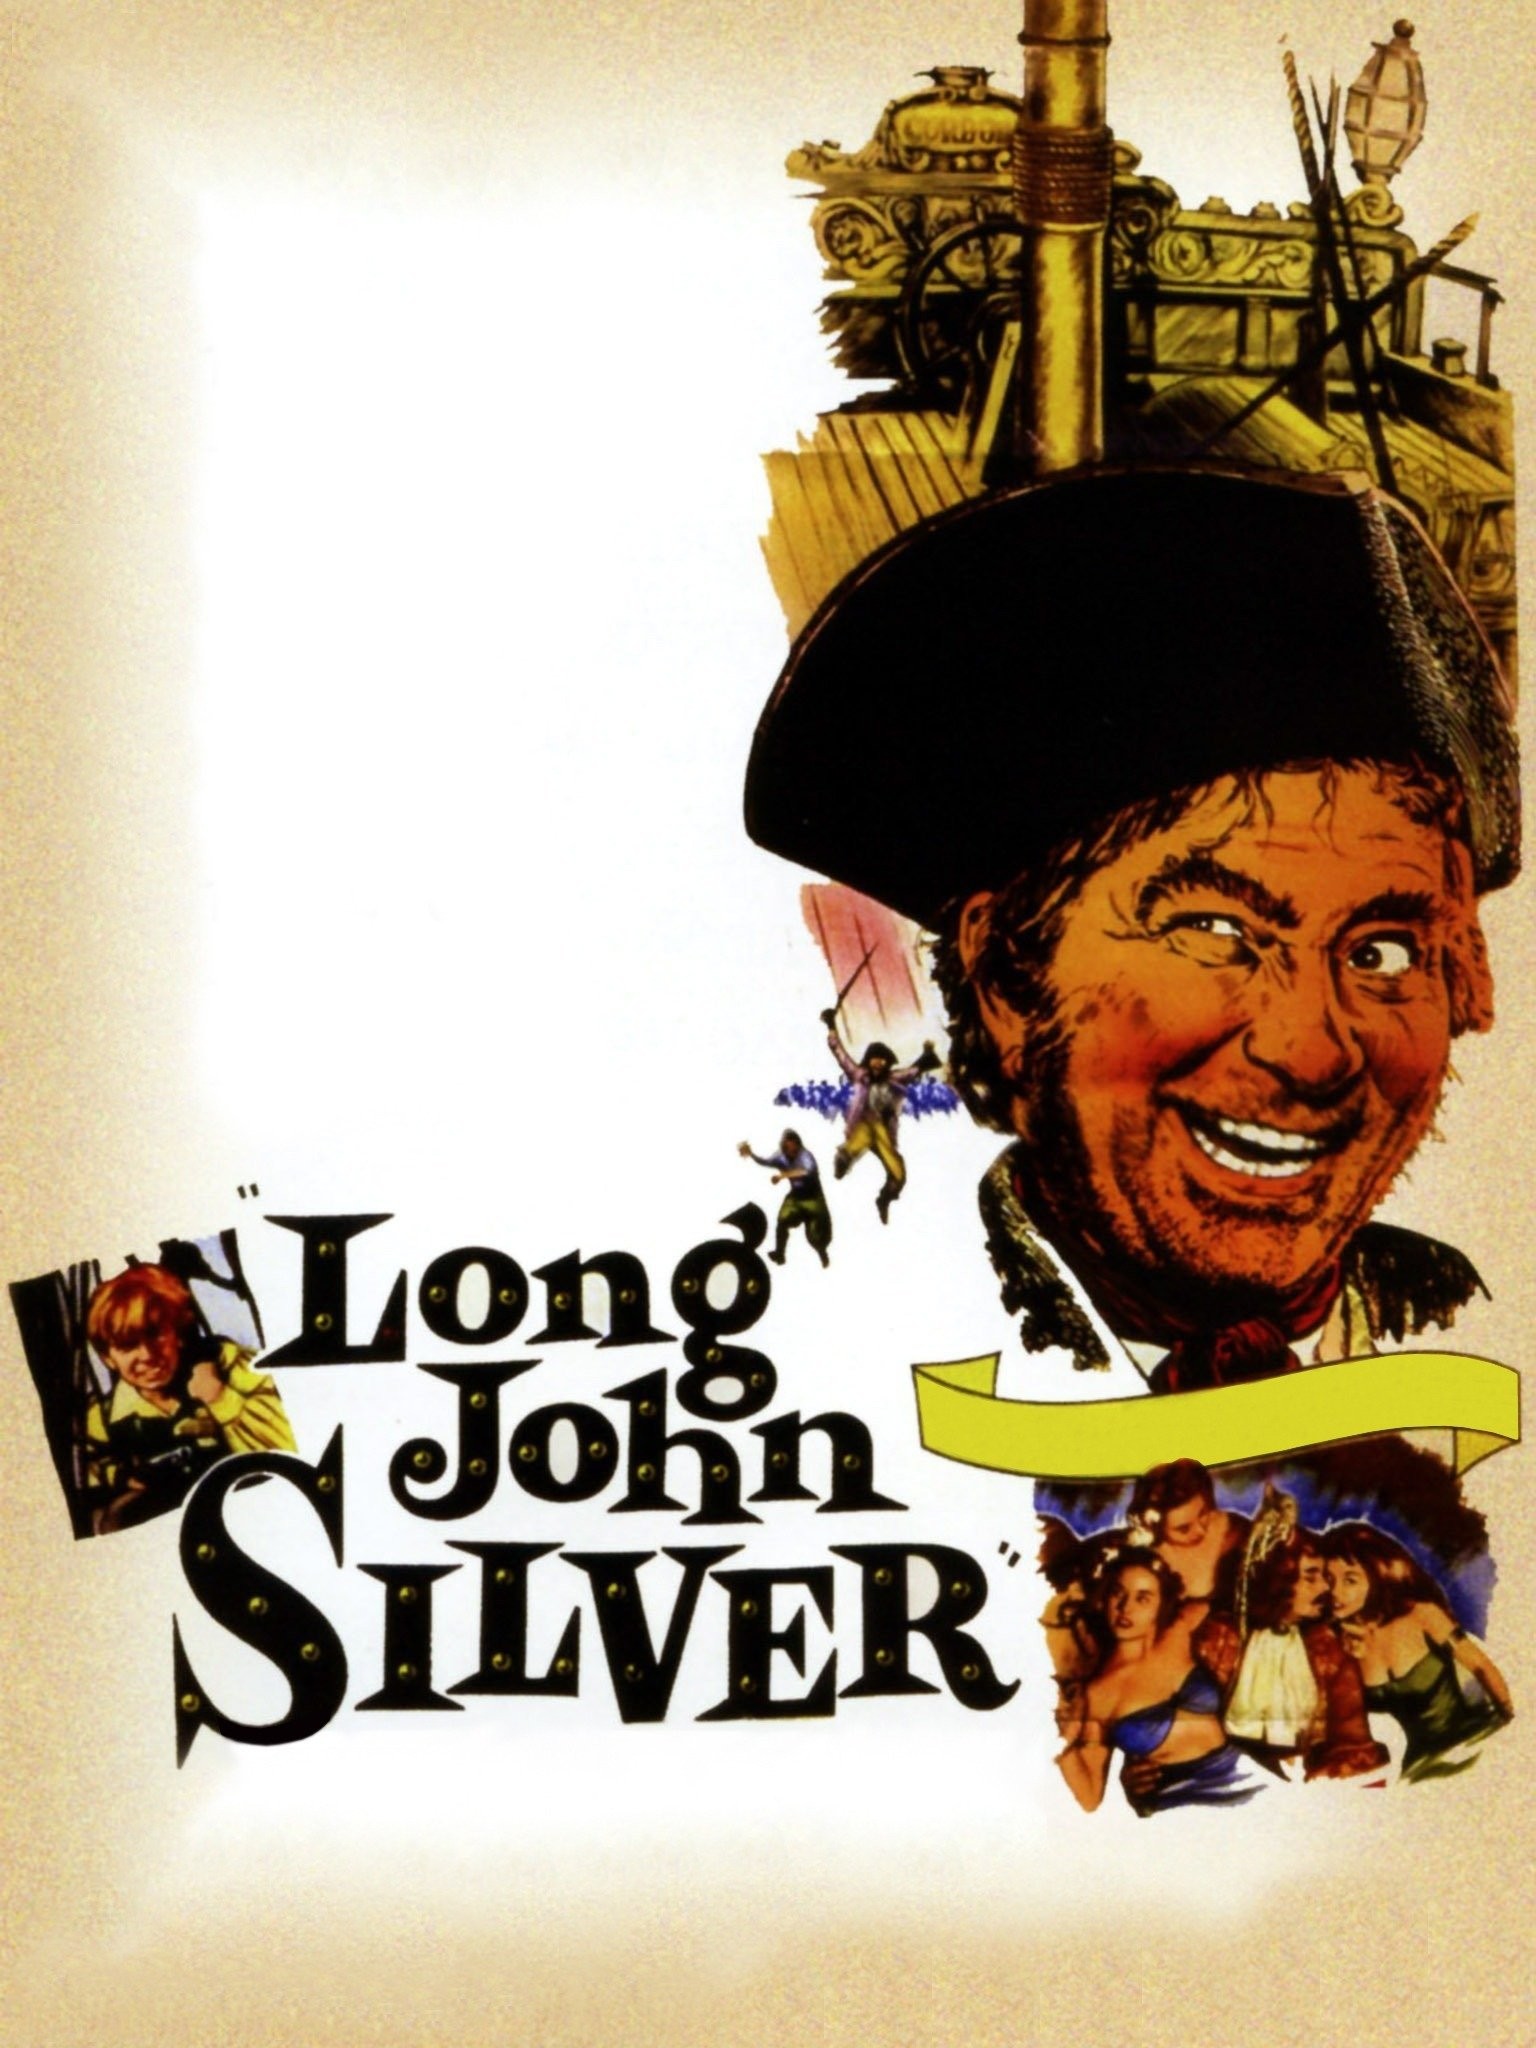 Find a Long John Silver's near you!